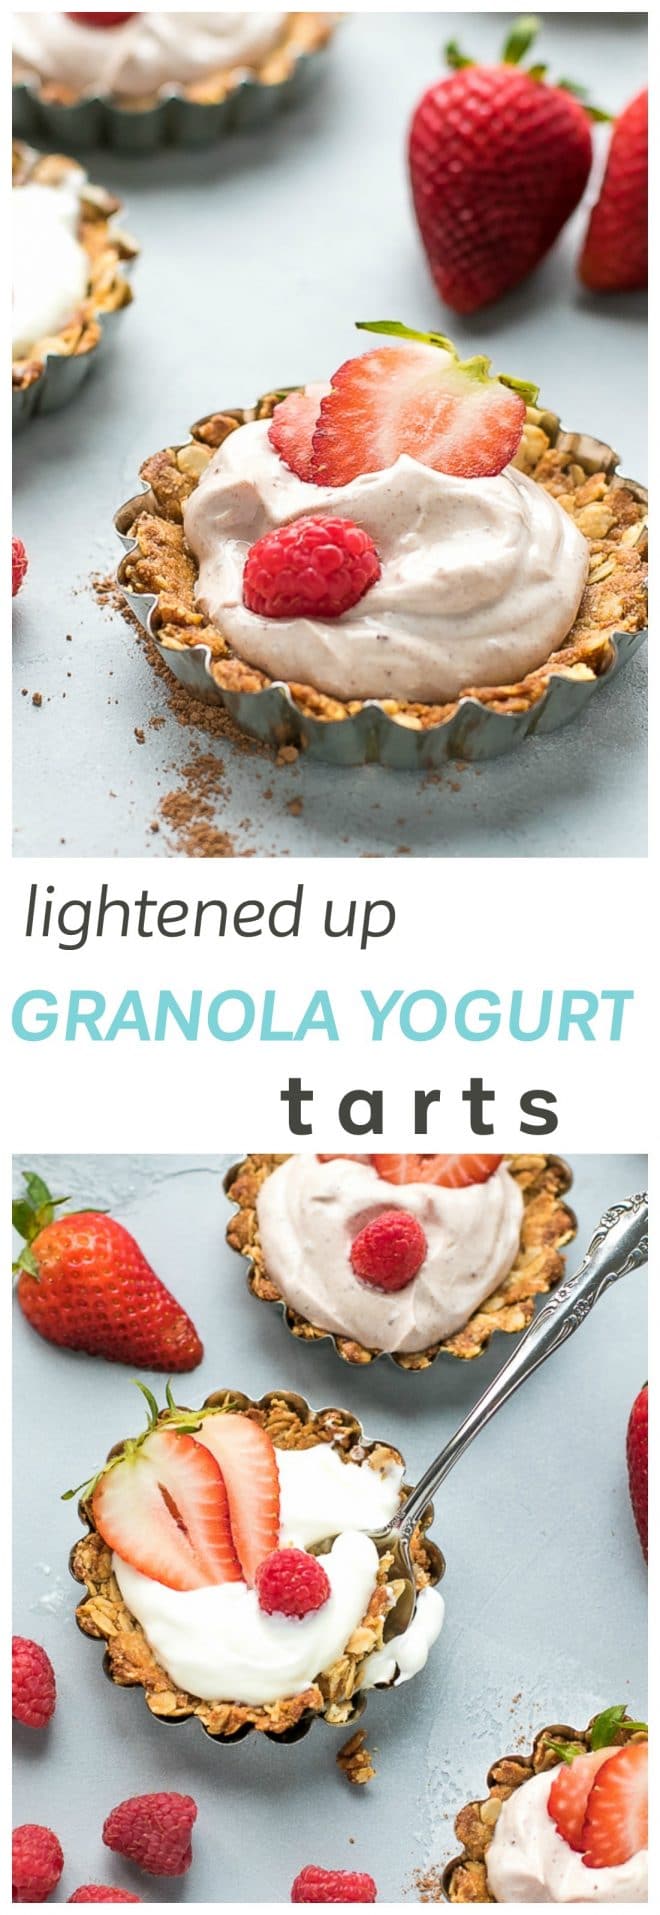 Lightened Up Granola Yogurt Tarts Recipe